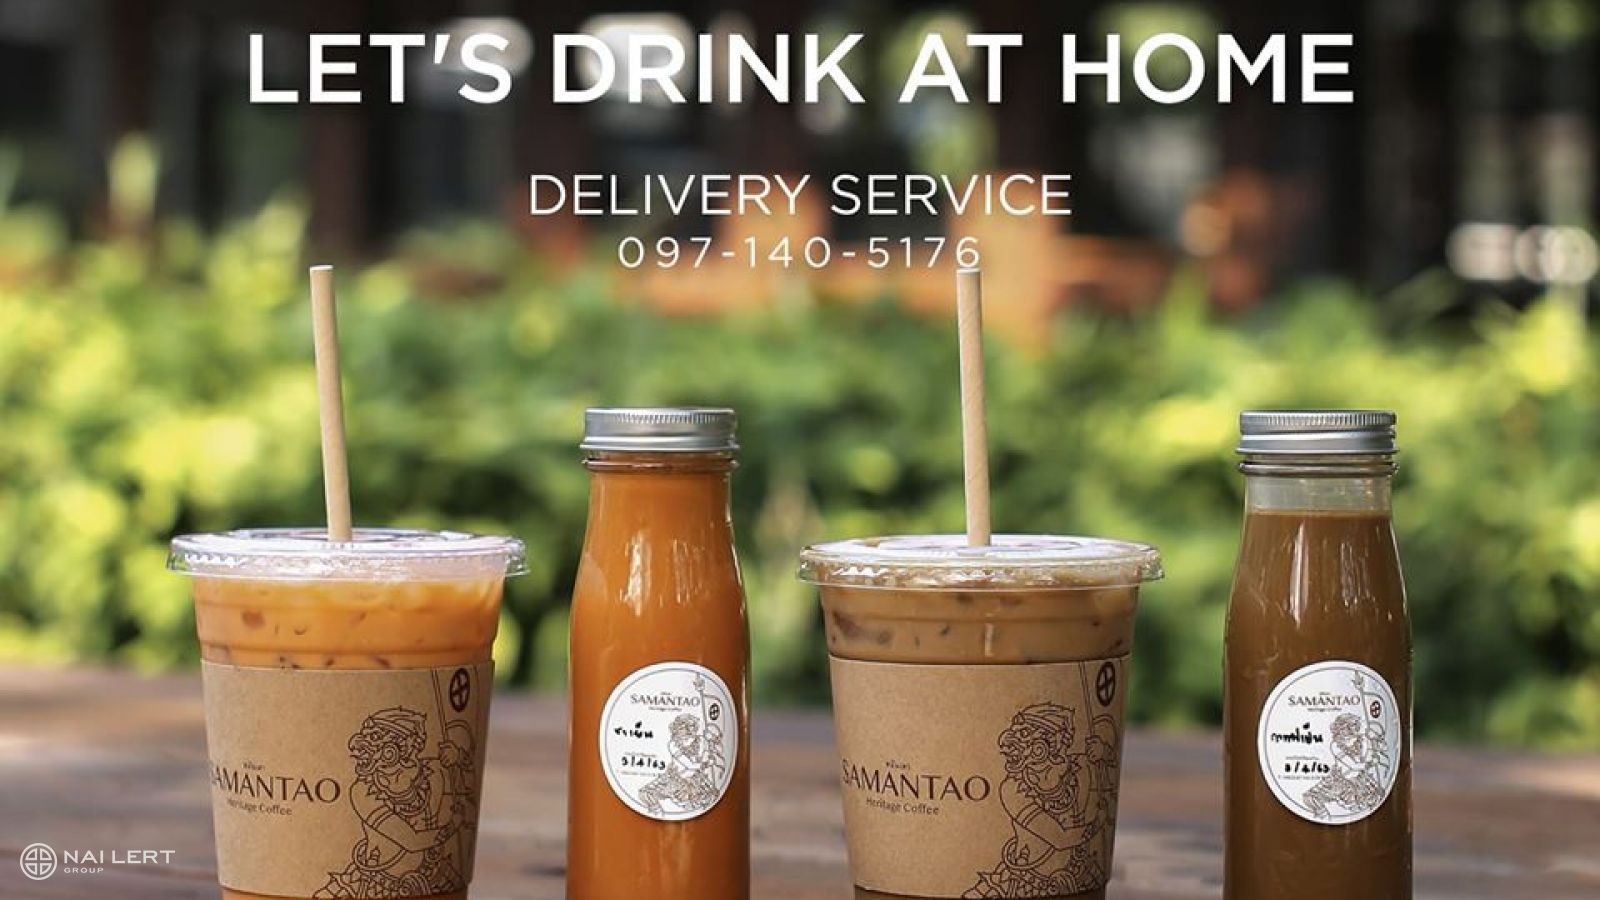 Samantao Heritage Coffee Delivery